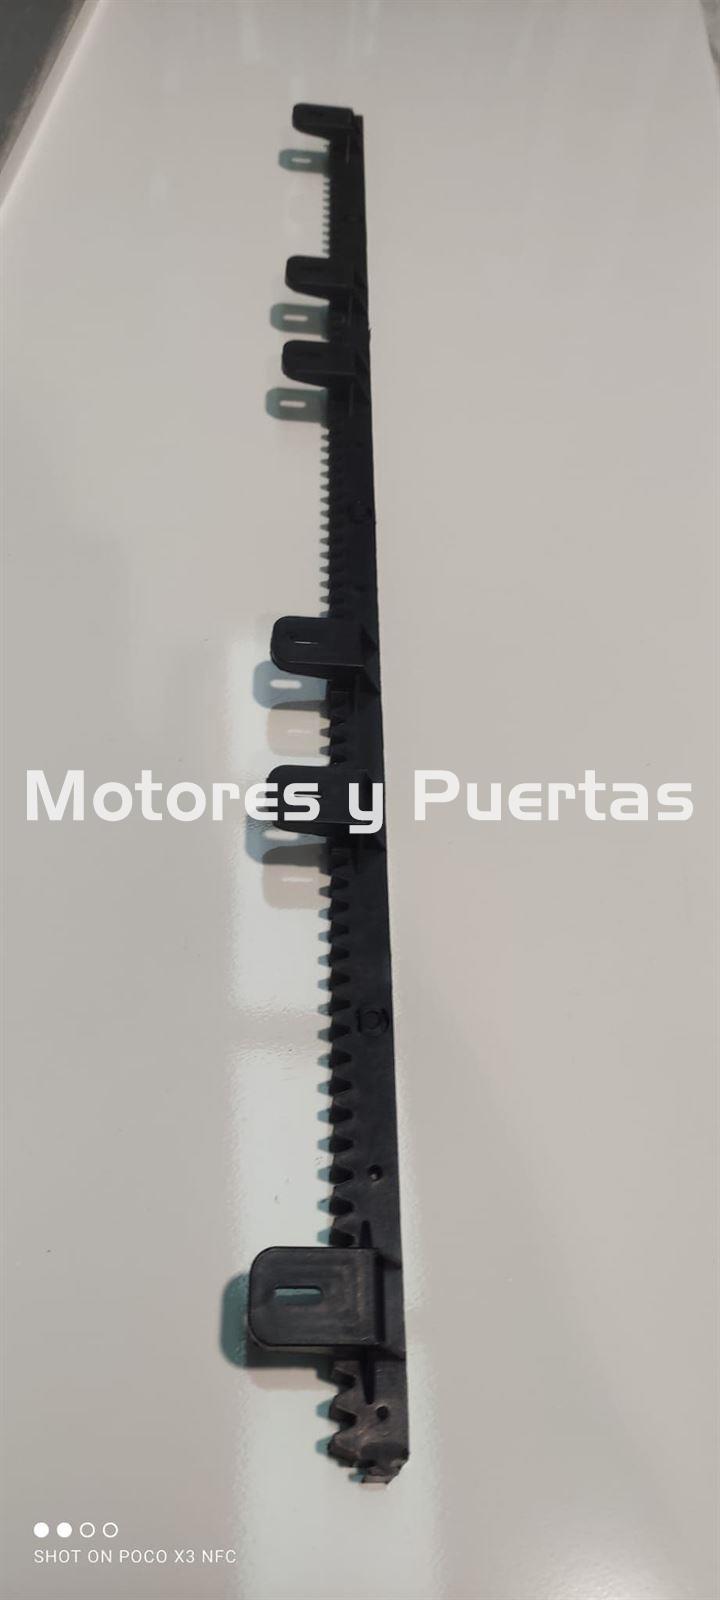 Cremallera de nylon para motor de corredera (1metro) - Imagen 1